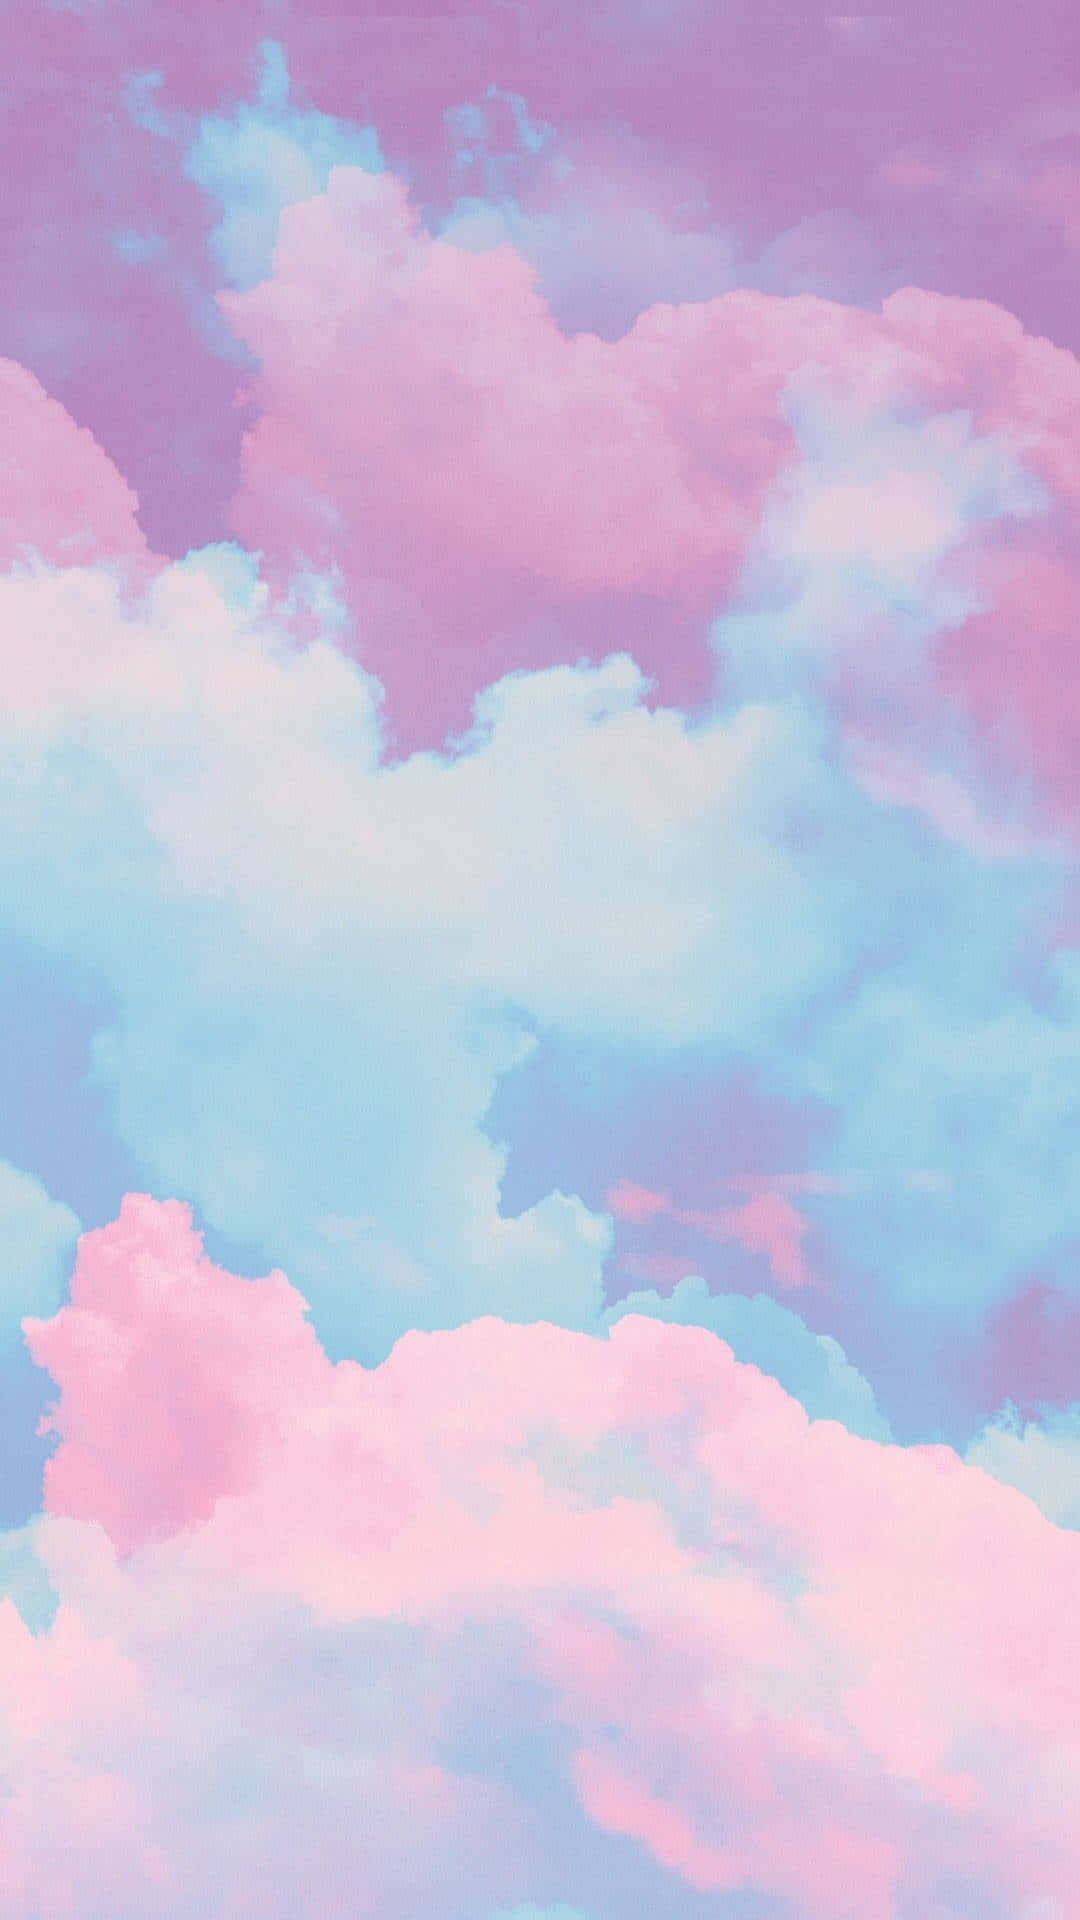 Den magiske lyserøde og blå skyer vil fylde væggene. Wallpaper